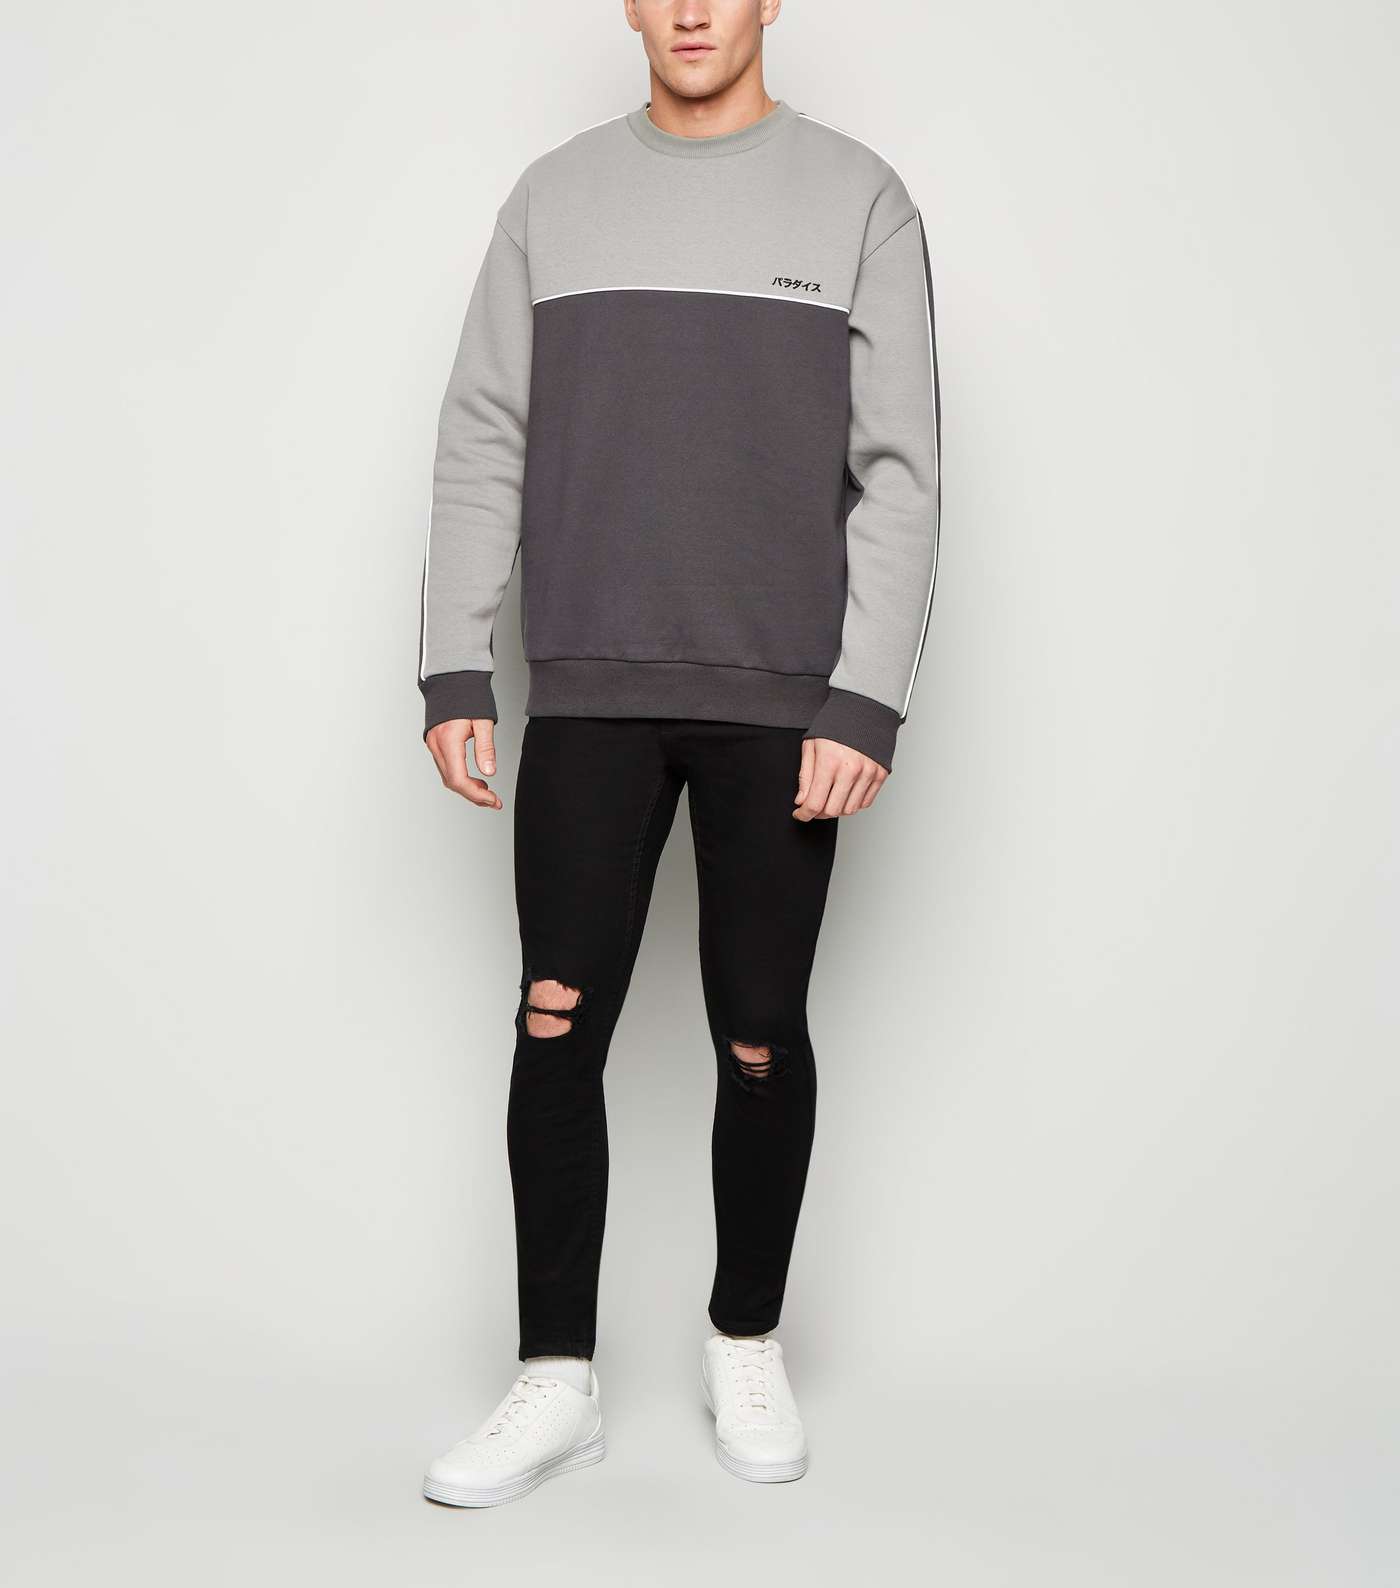 Pale Grey Colour Block Sweatshirt Image 2